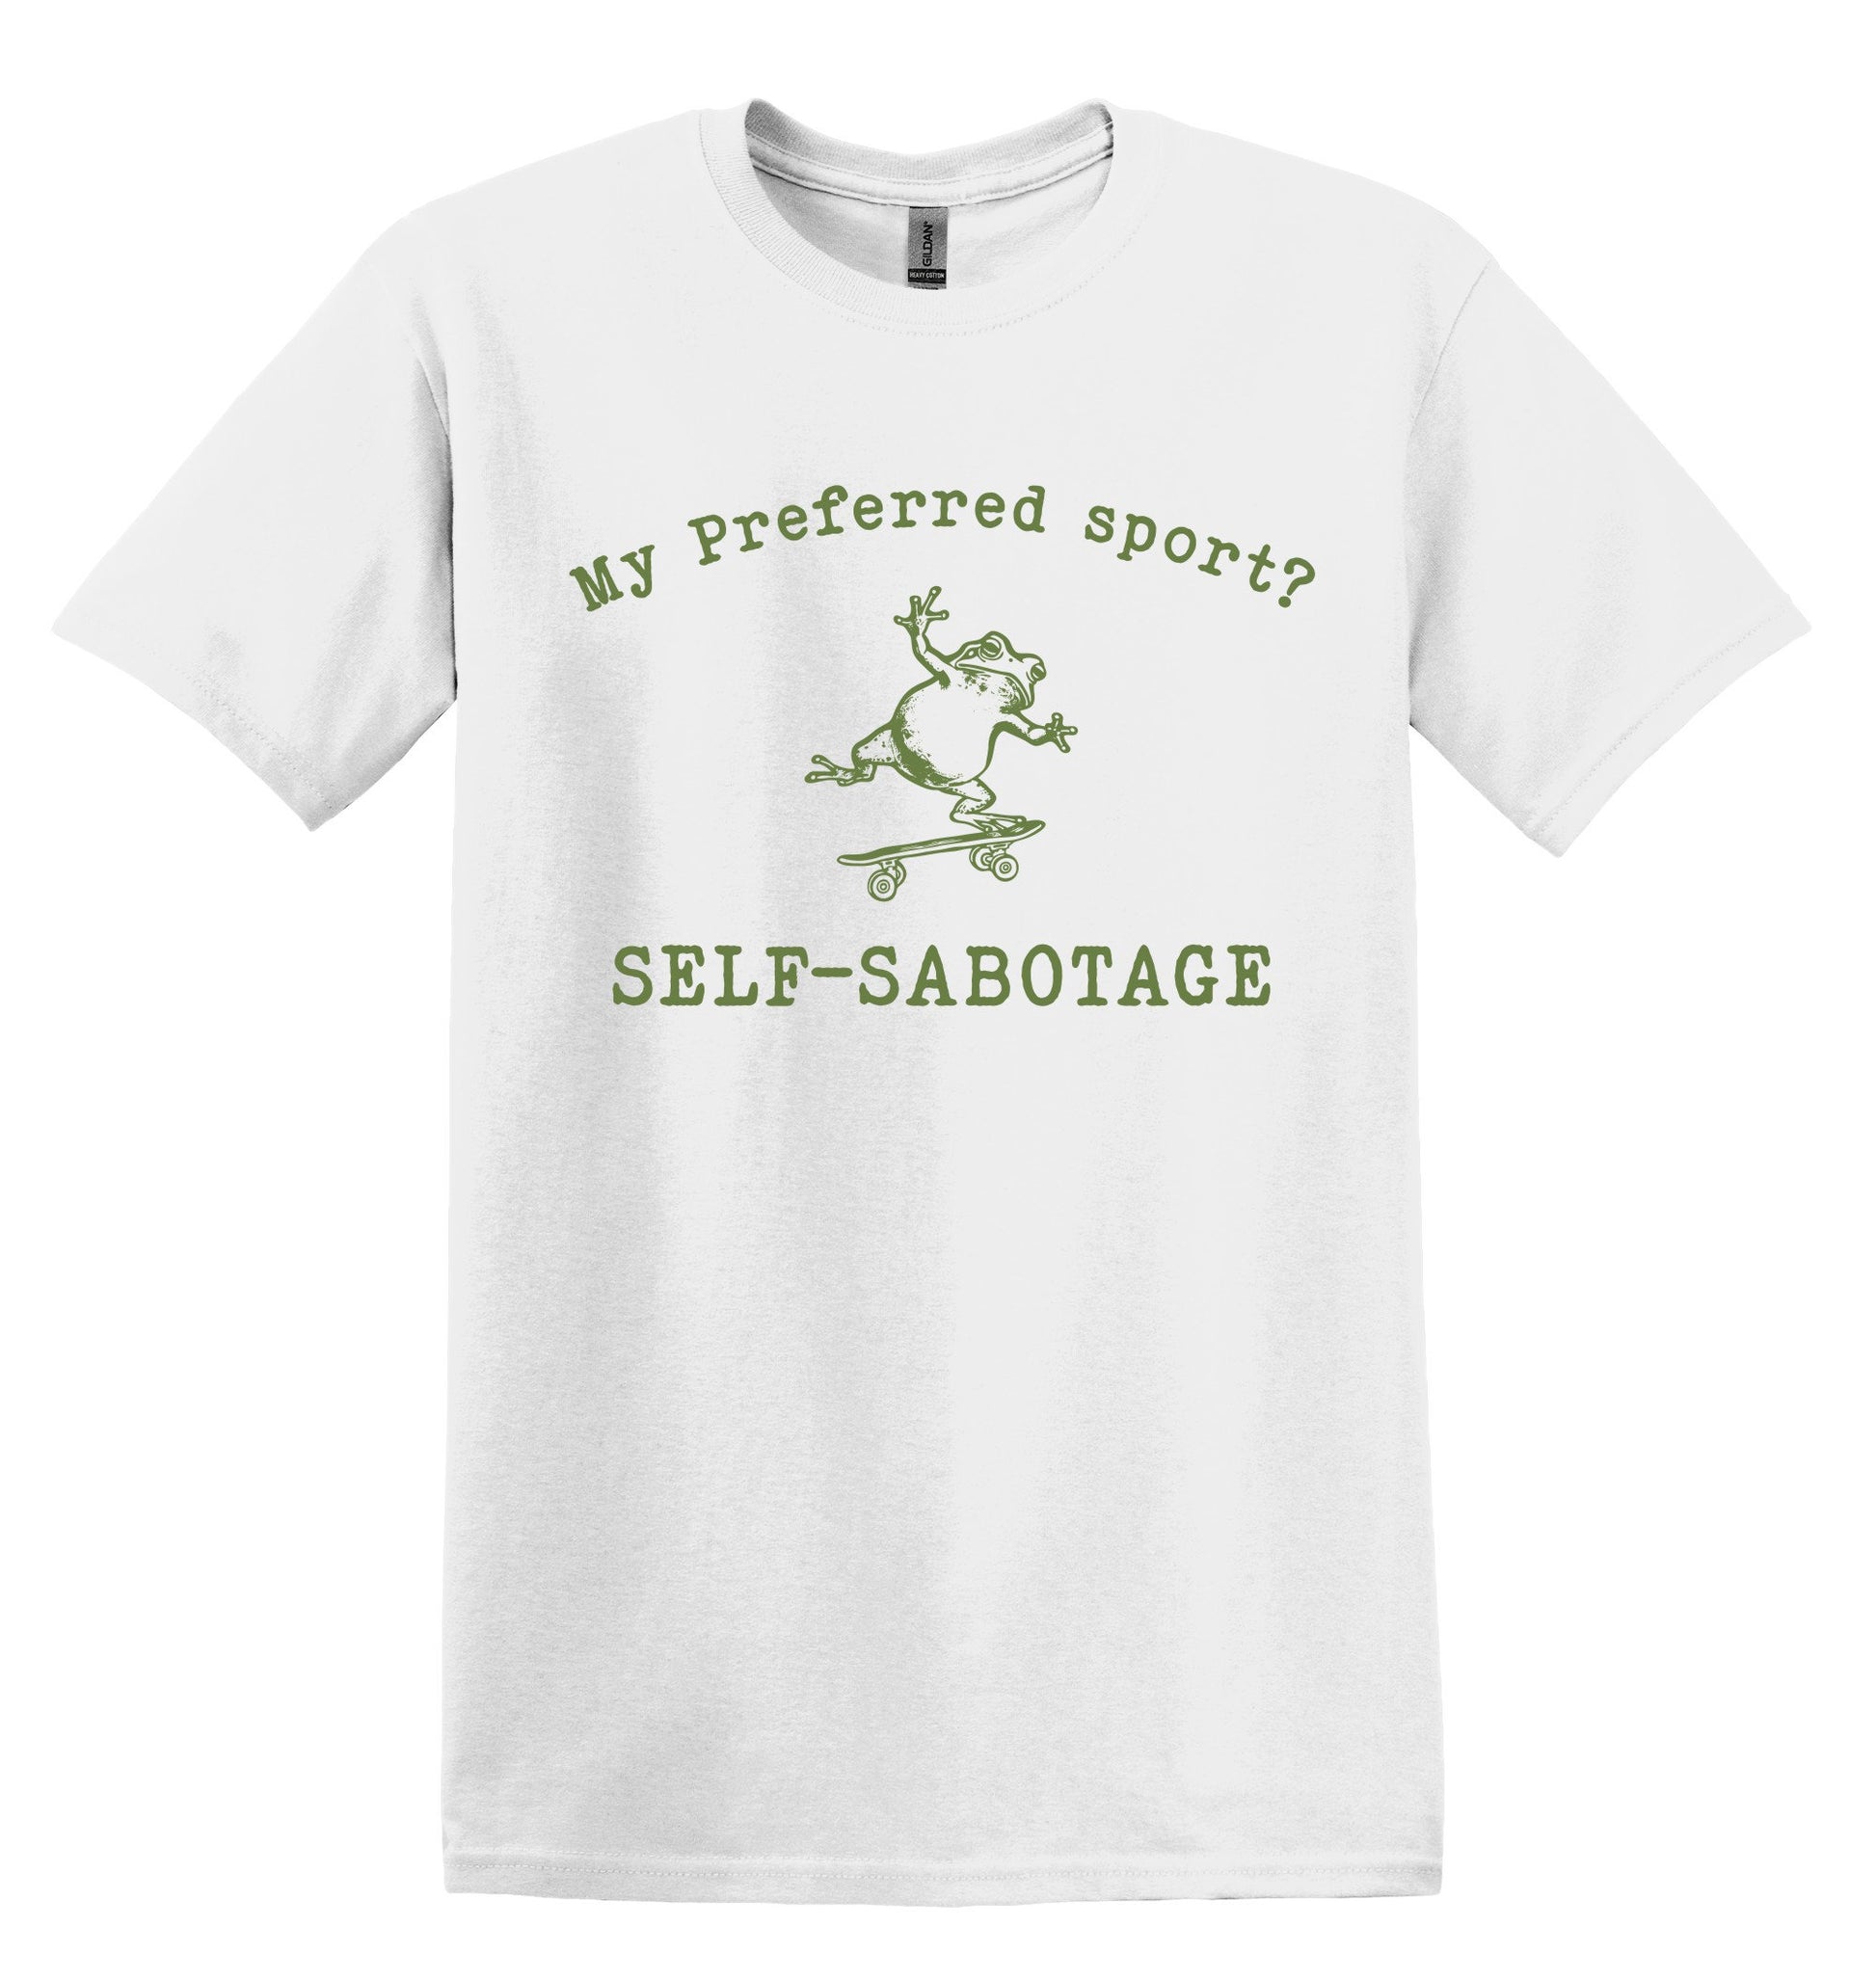 My Preferred Sport? Self-Sabotage Shirt - Funny Graphic Tee